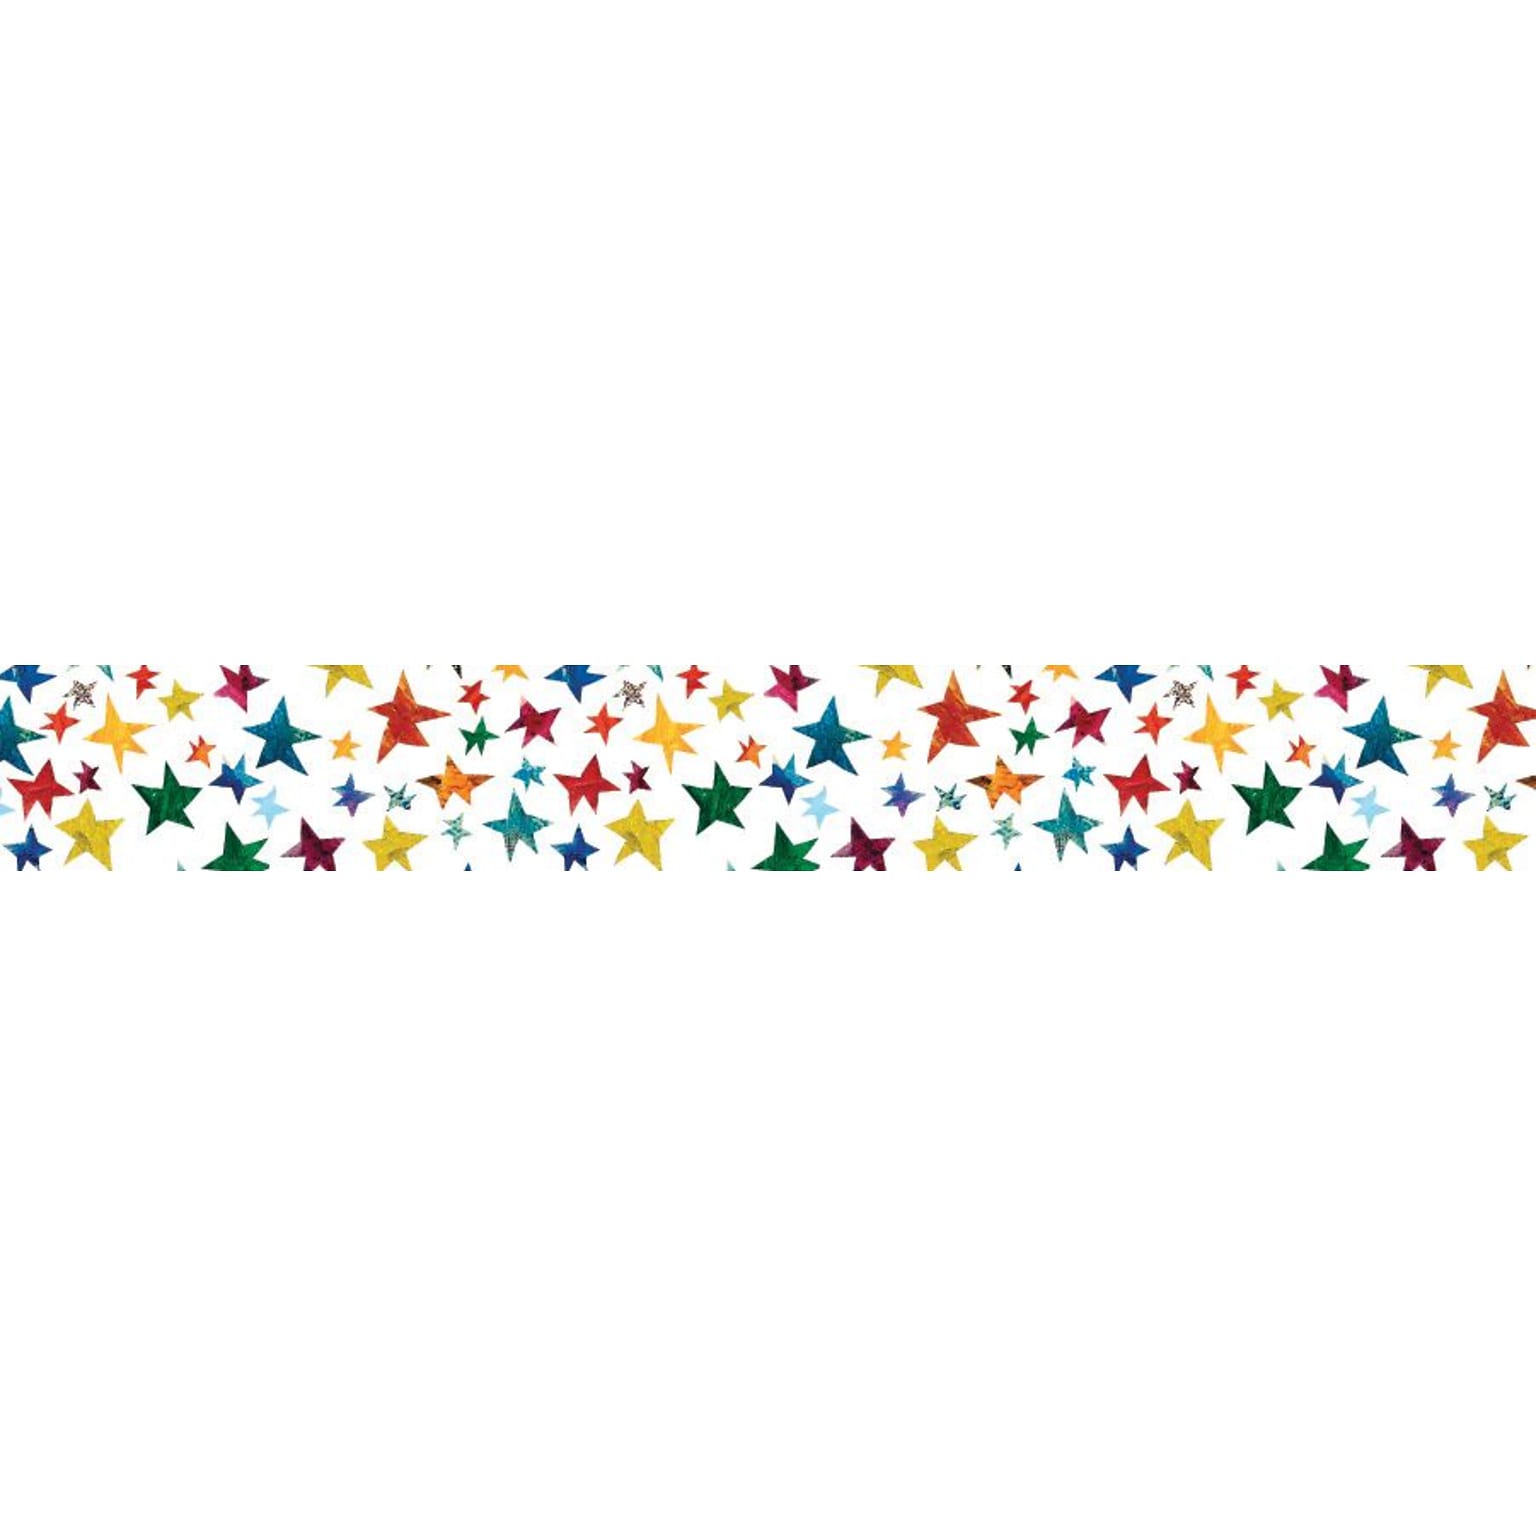 Carson-Dellosa Eric Carle 36 x 3 Straight, World of Eric Carle Sparkling Stars Borders 12 Strips (108064)